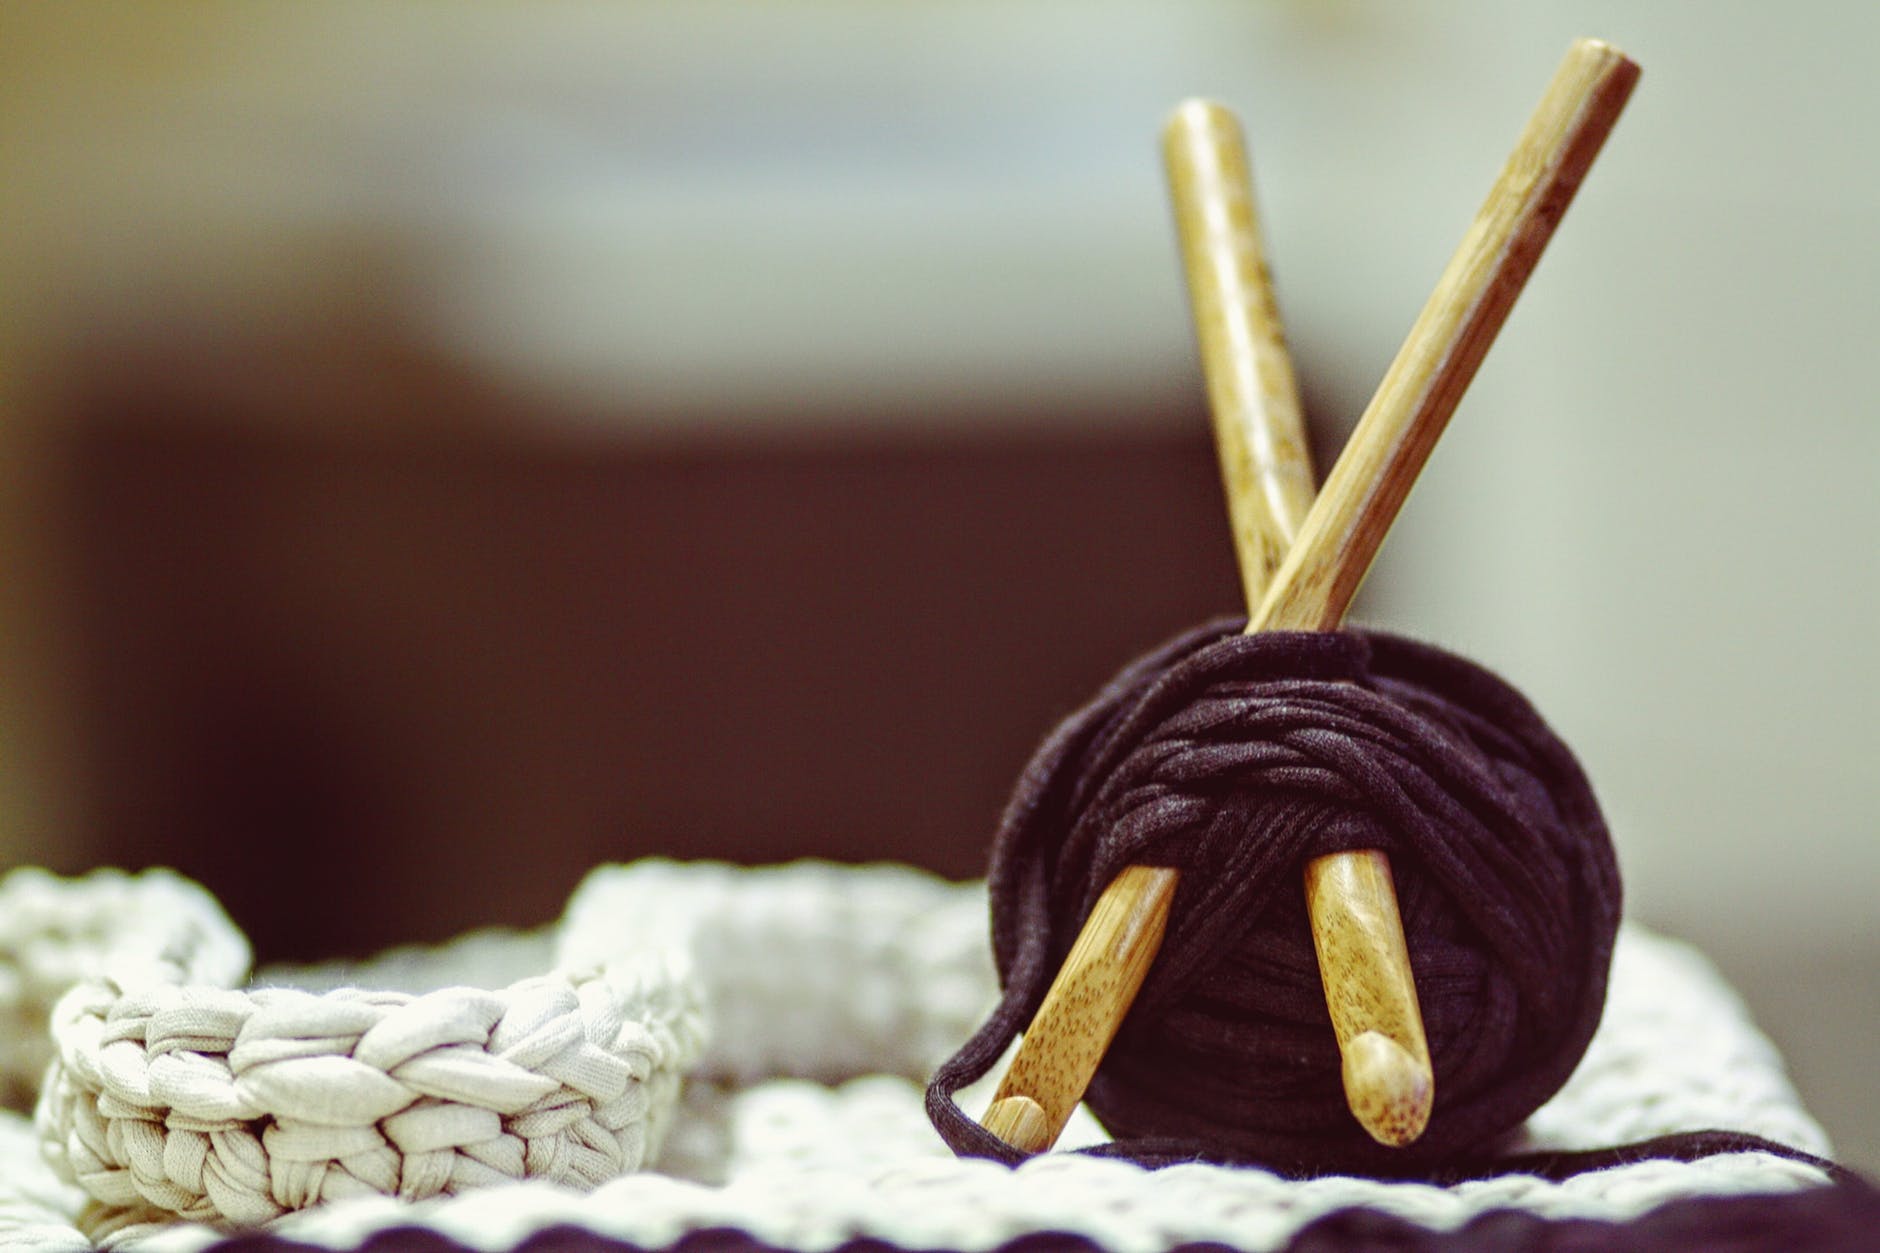 knitting patterns online